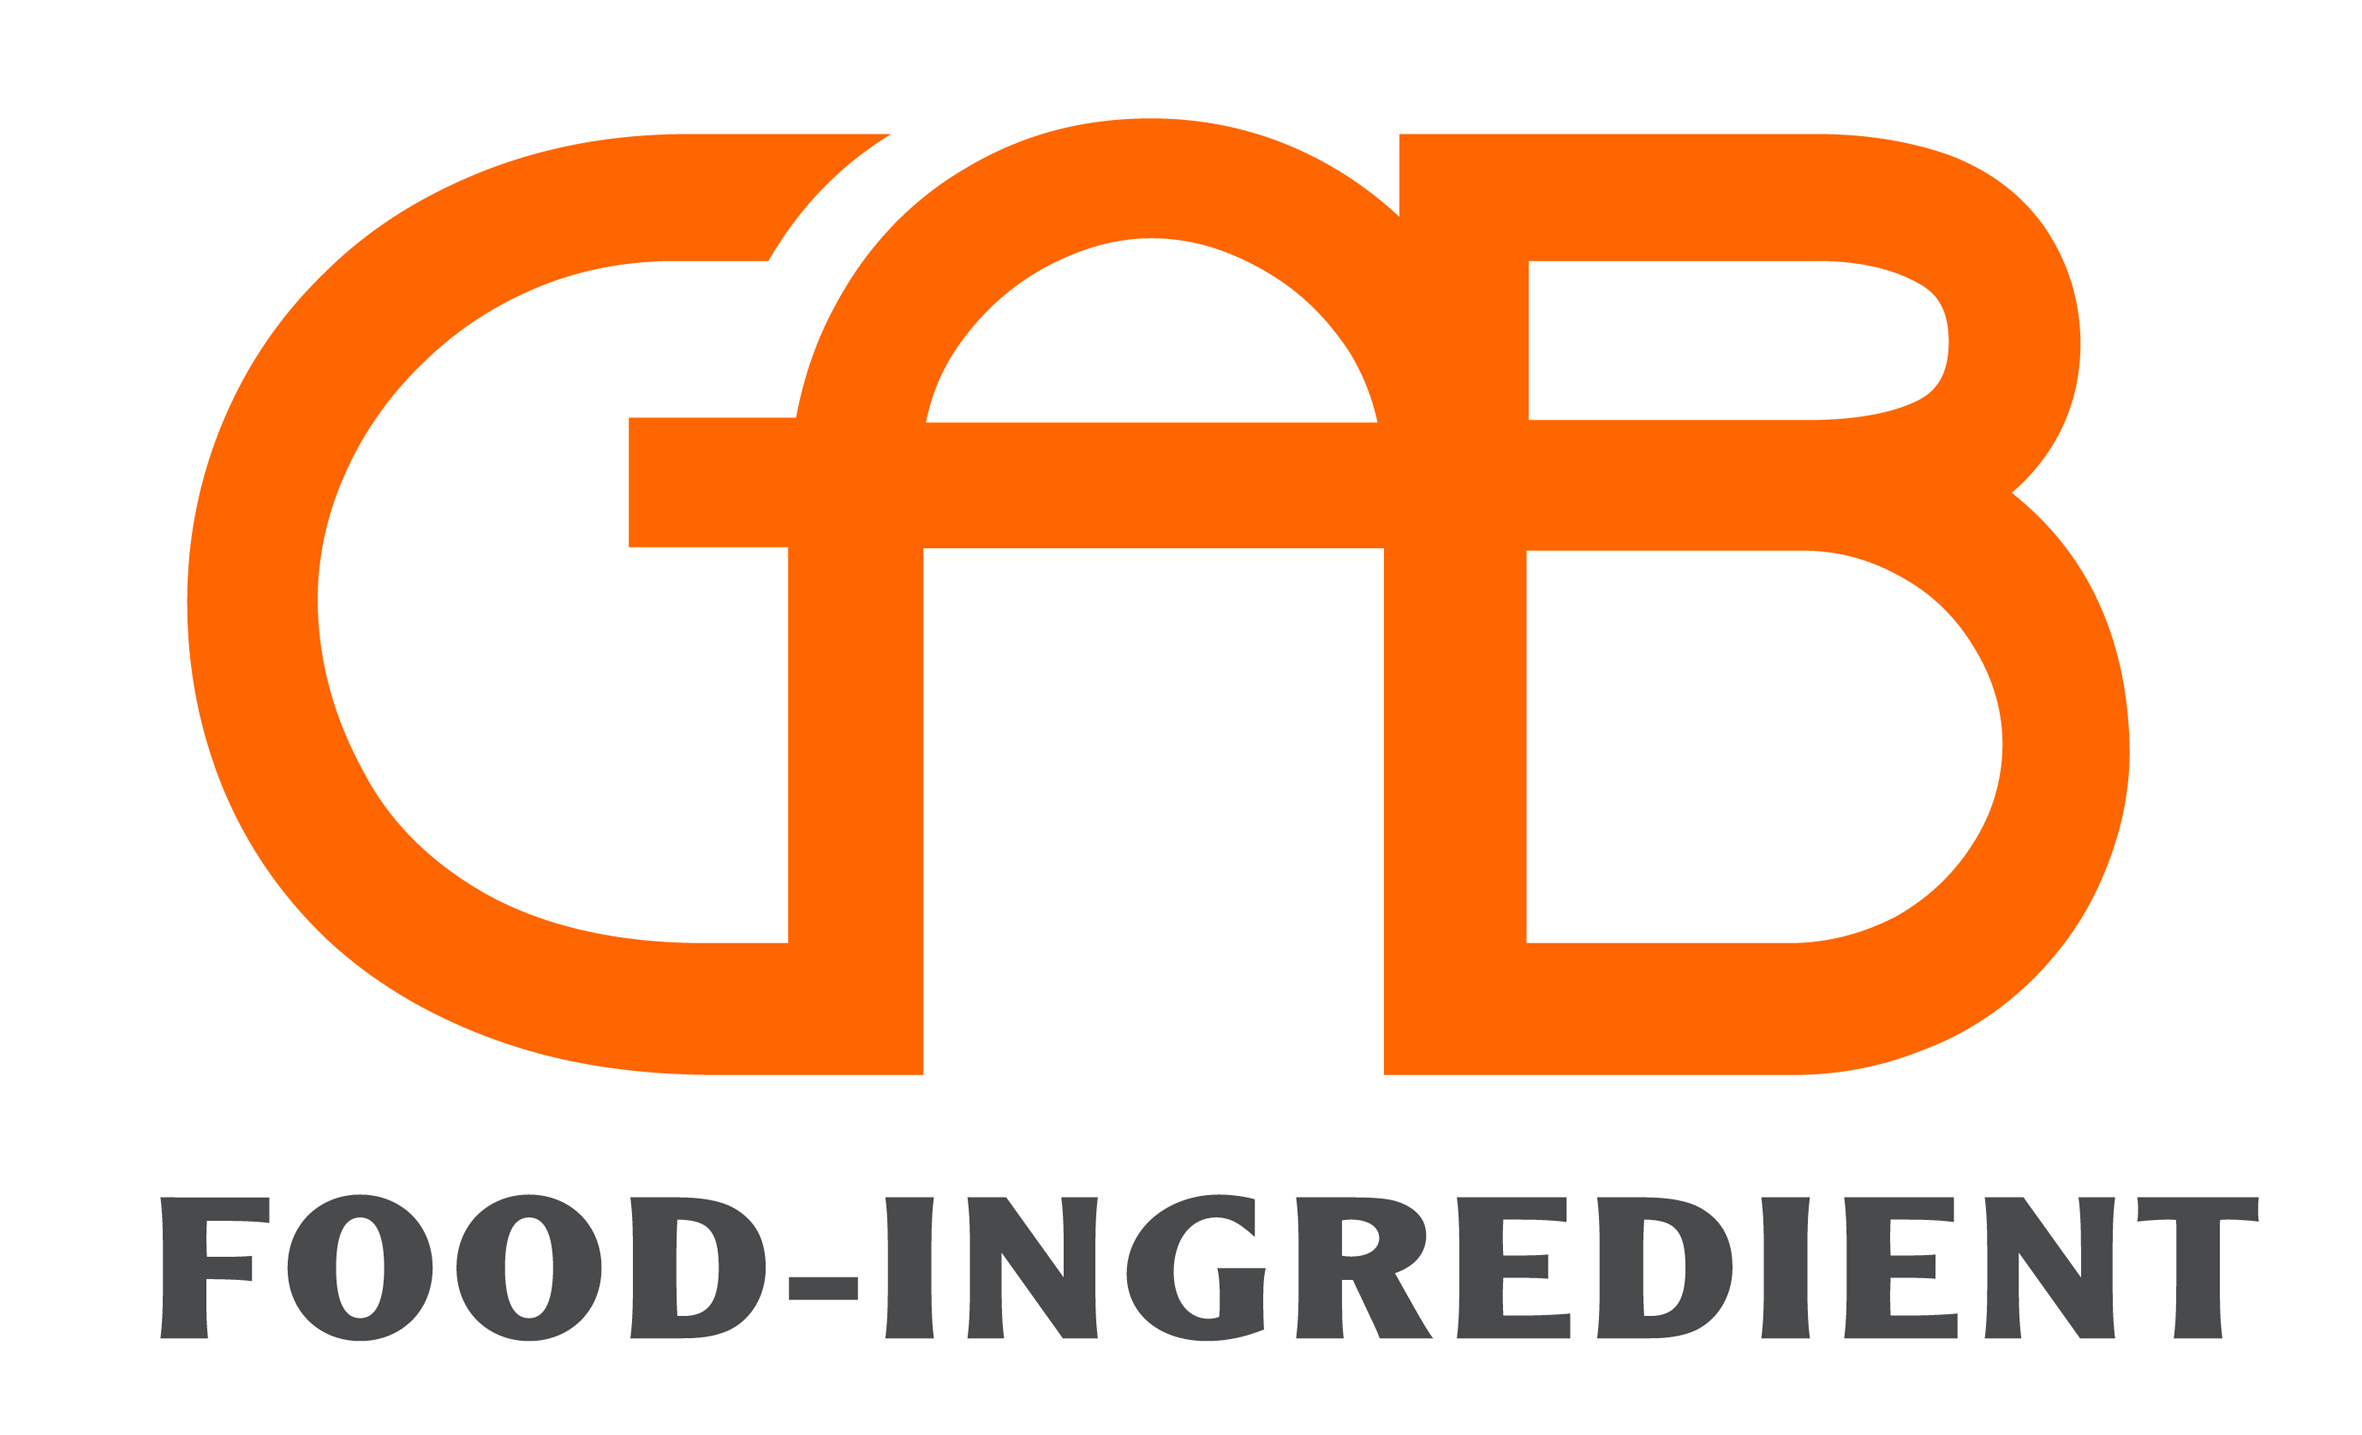 GAB FOOD-INGREDIENT